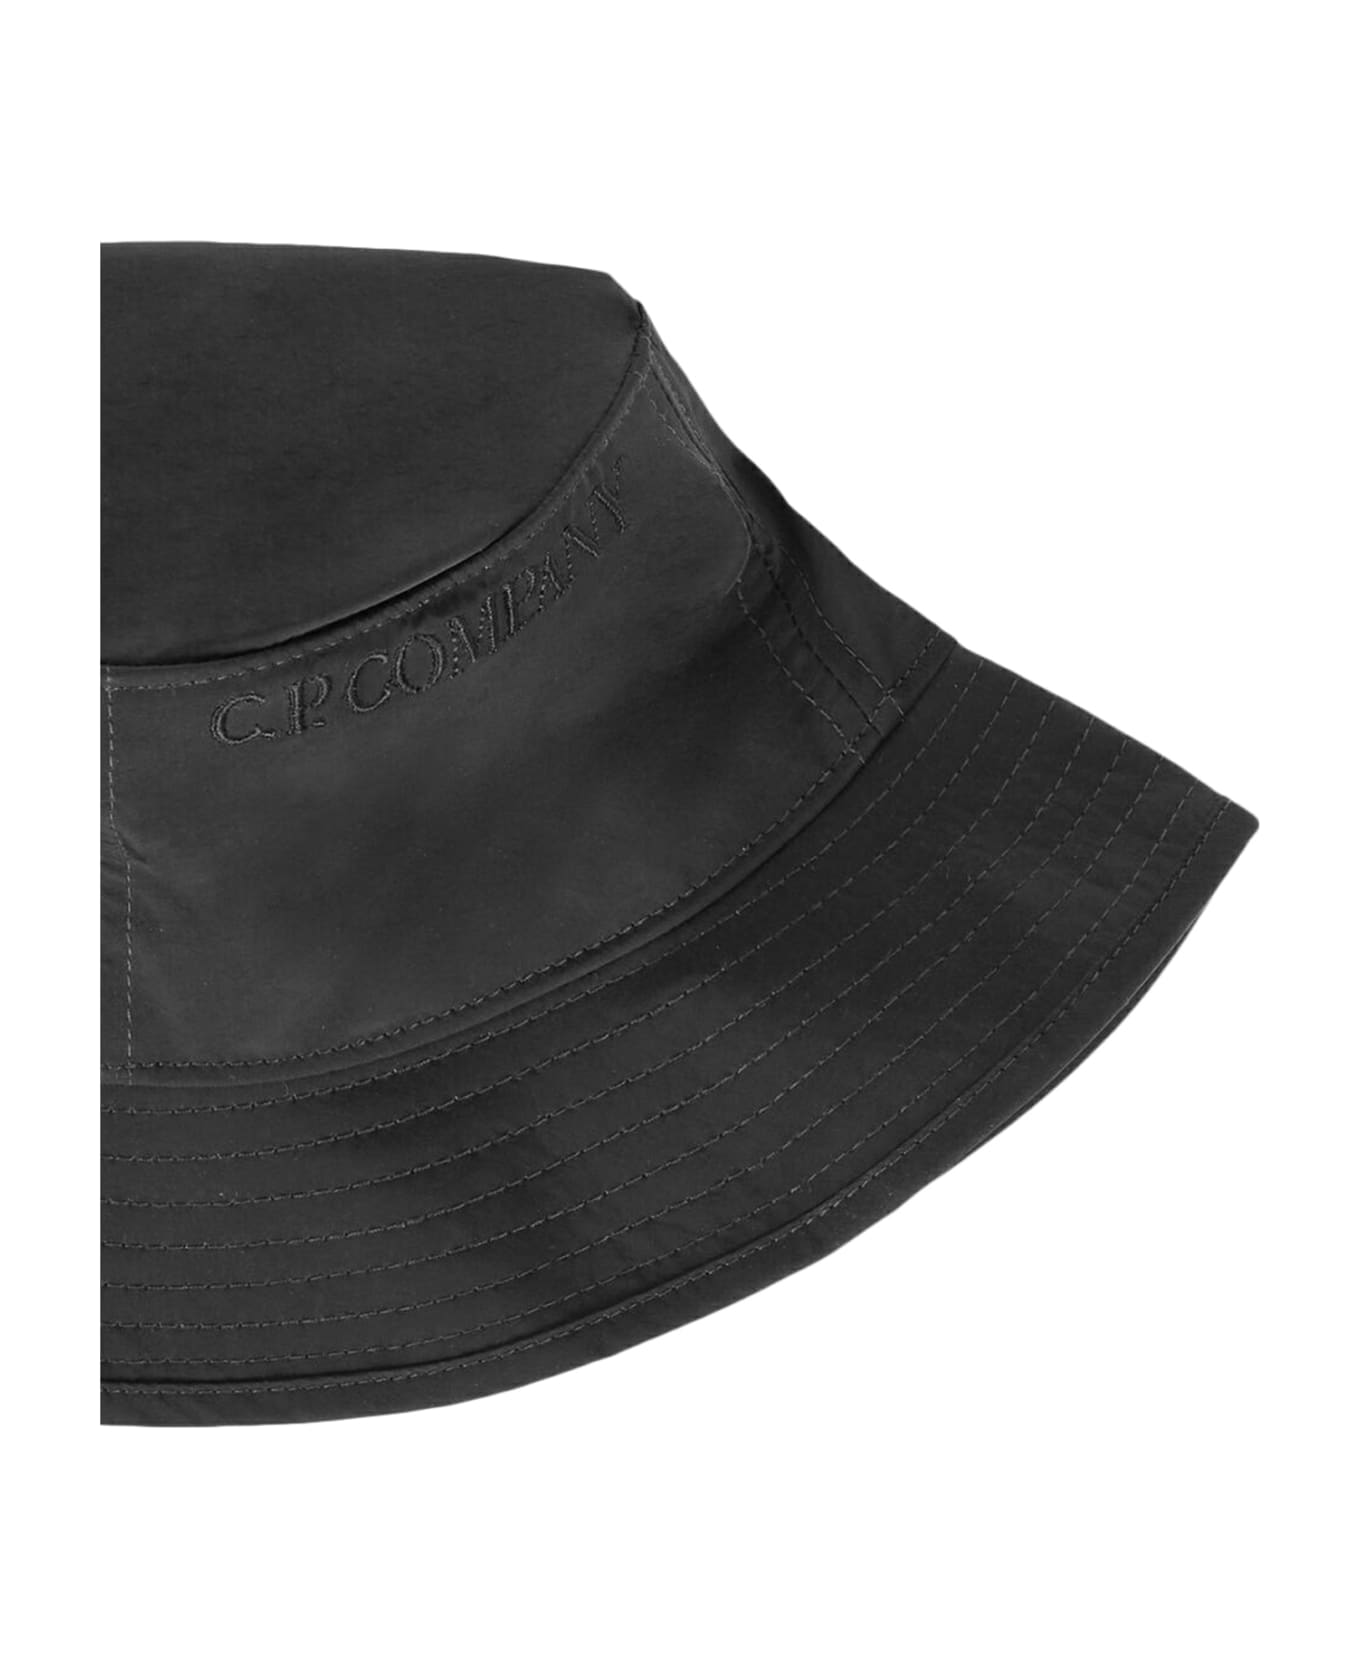 C.P. Company Bucket Hat - Black